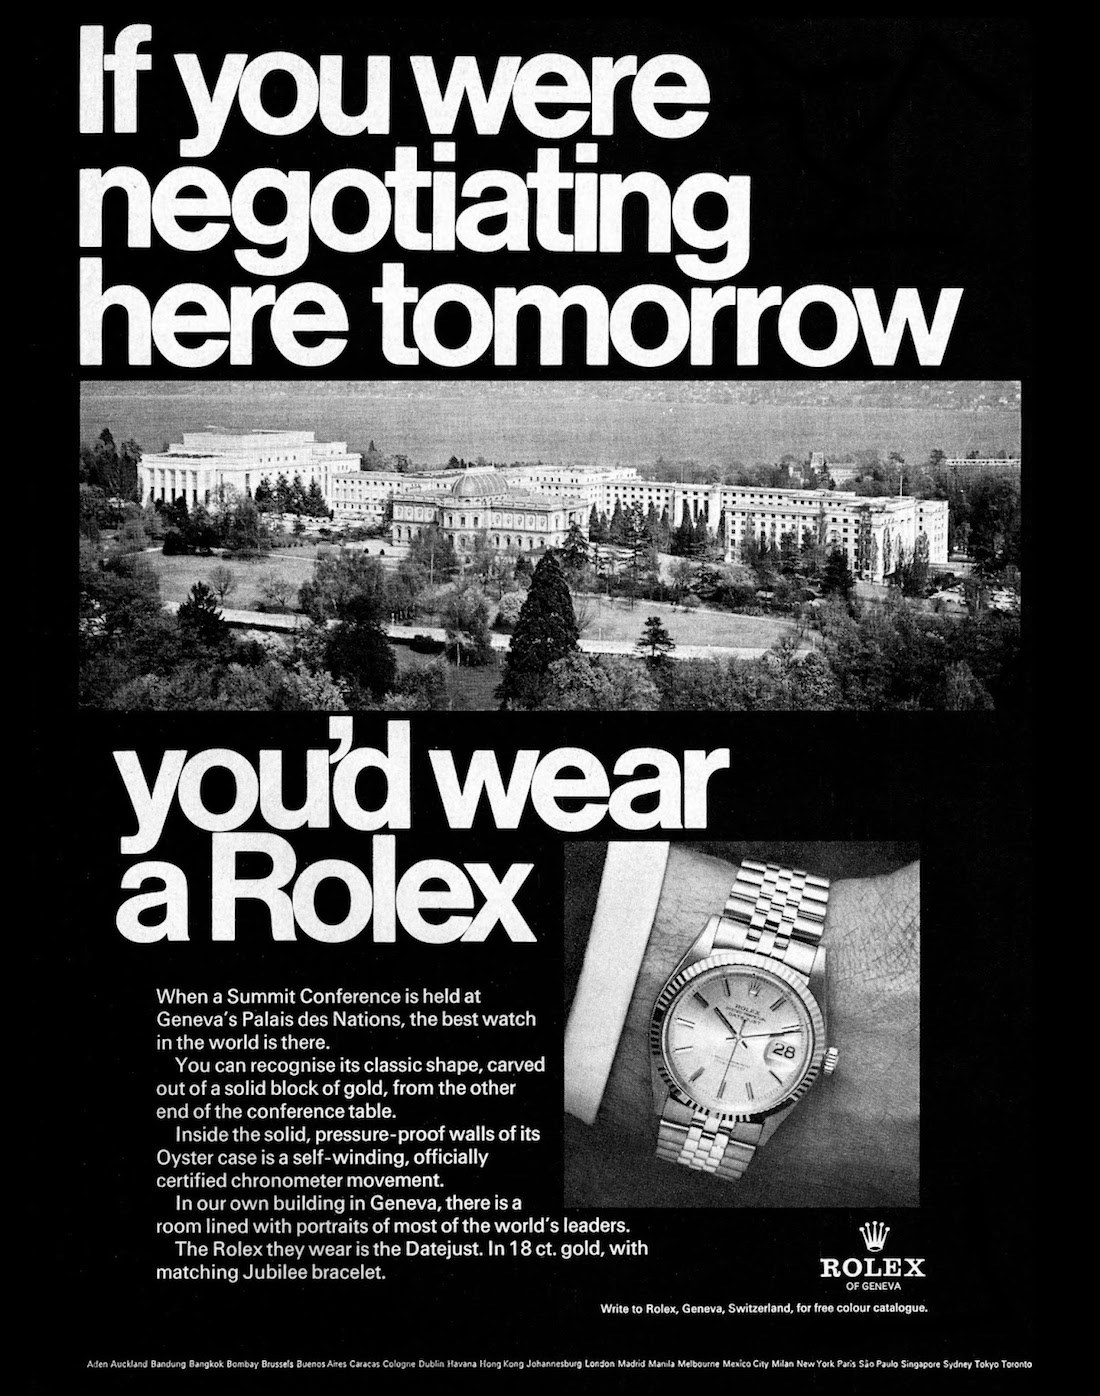 Rolex-Datejust-advertisement-ad-advertising-marketing-vintage-Rolesor-Jubilee-fluted-bezel-aBlogtoWatch-2